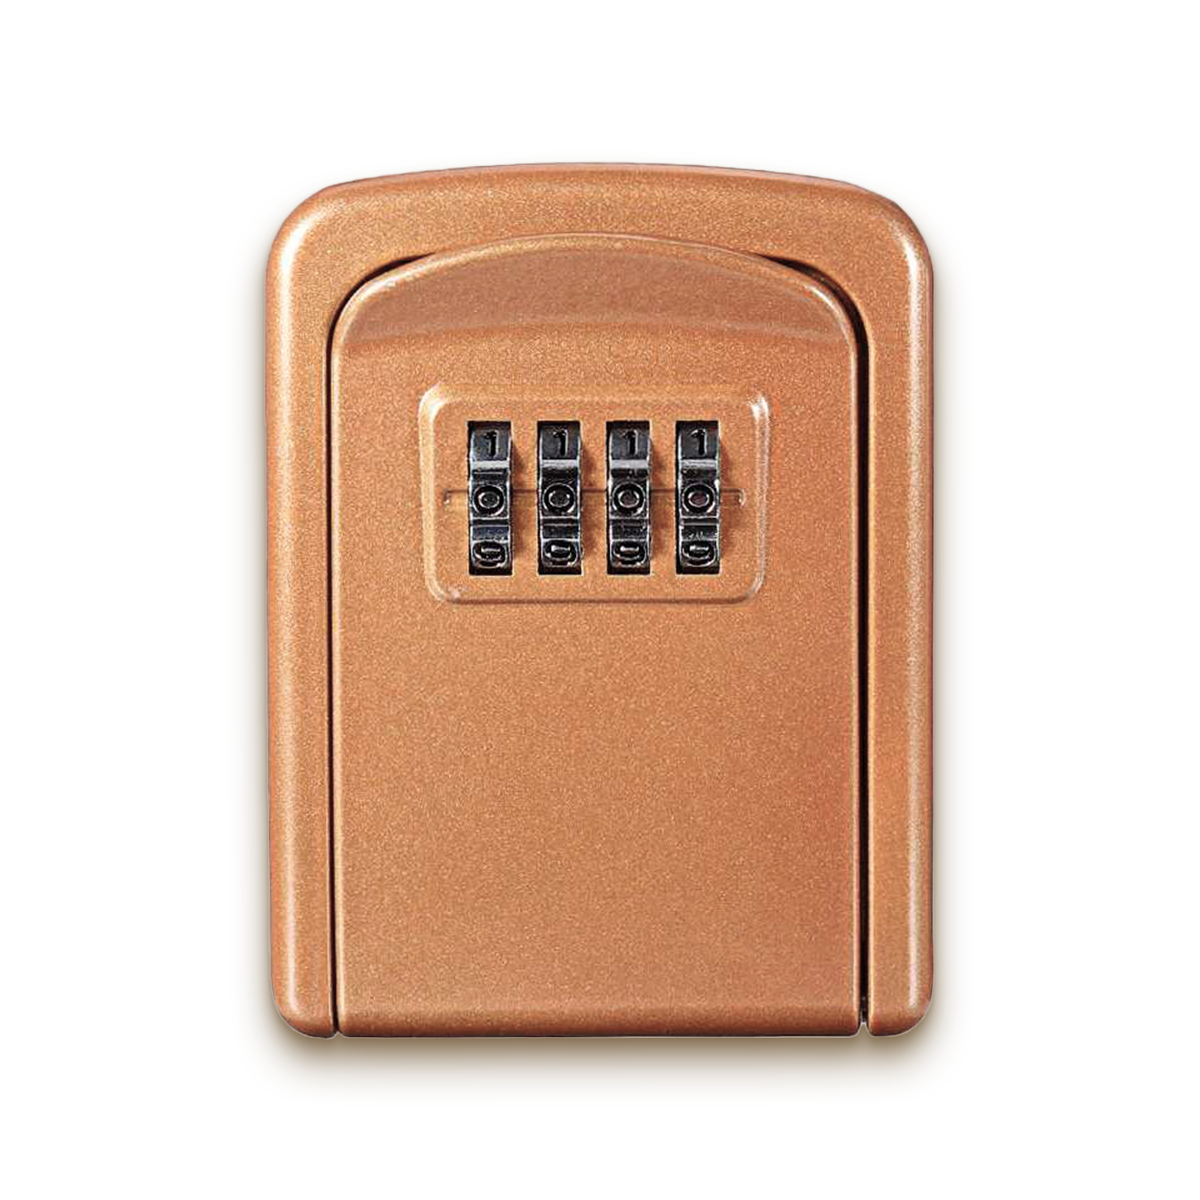 91003710 Ключница с кодовым замком 2015/01, алюминий, 90х75х35 мм, цвет золотой STLM-0434761 PUR PURPOSE